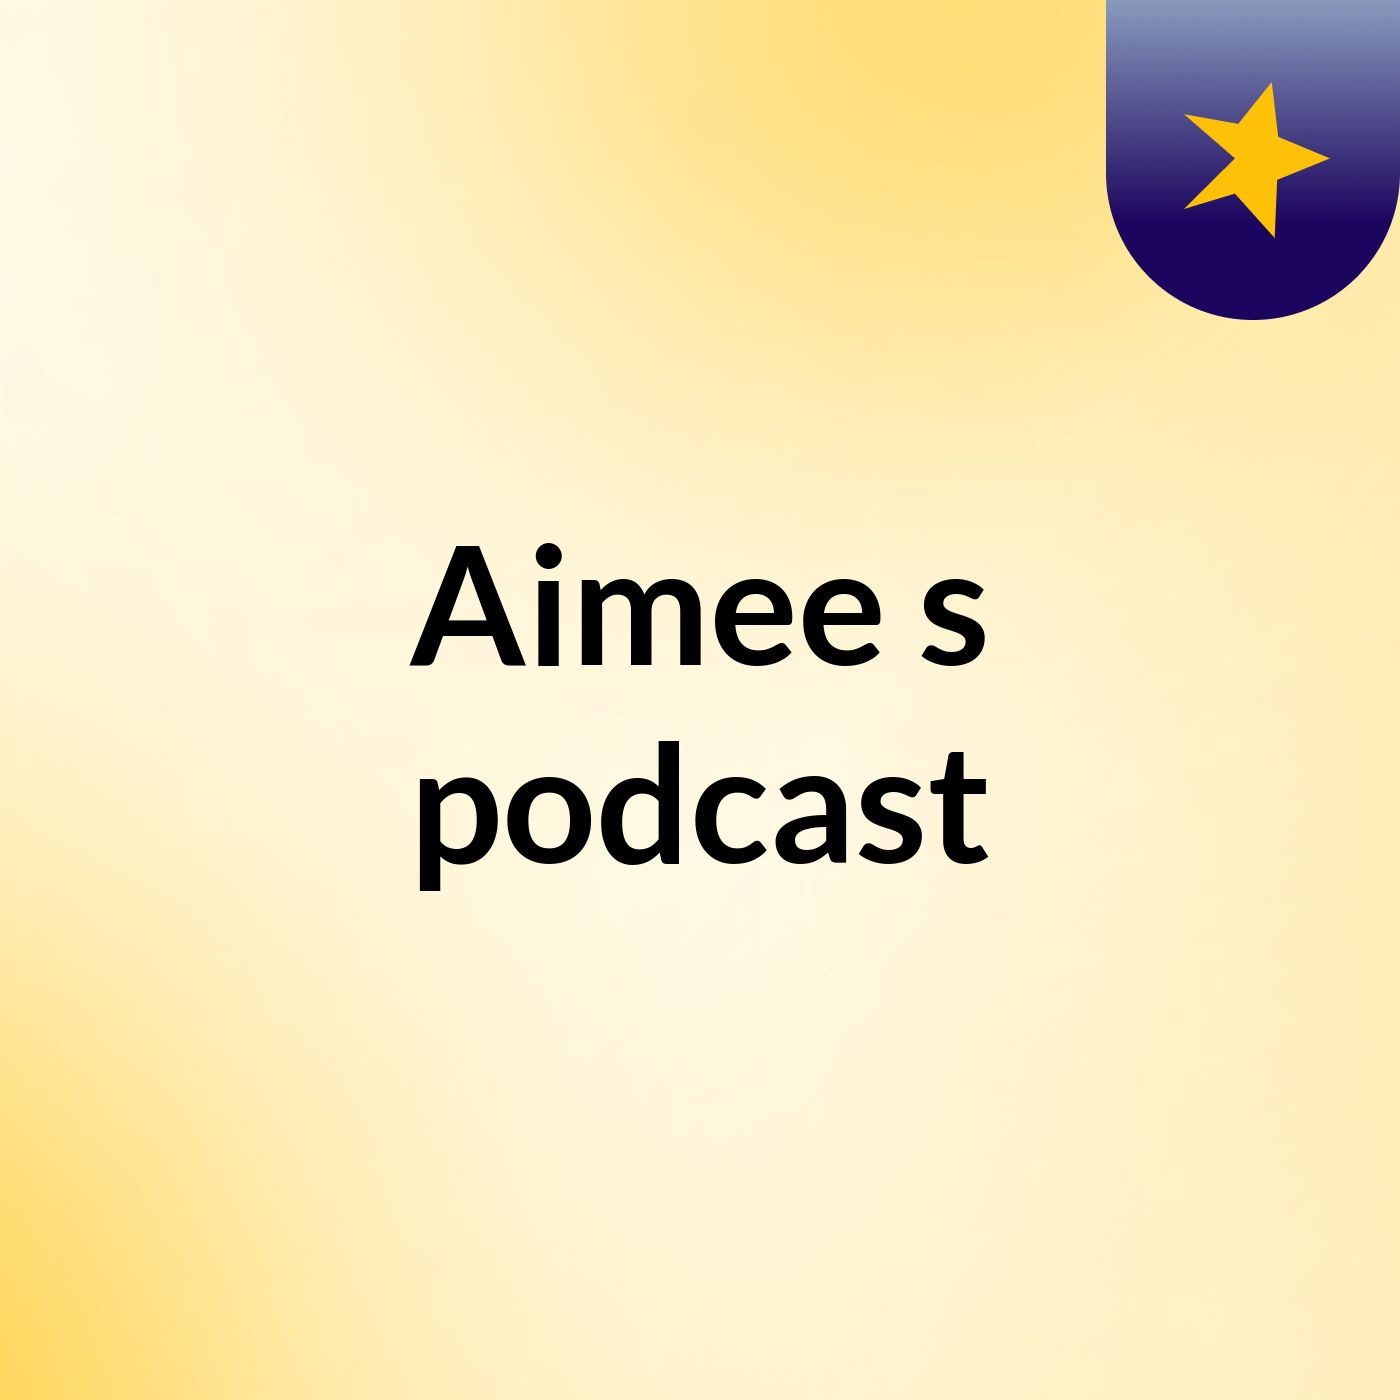 Aimee's podcast